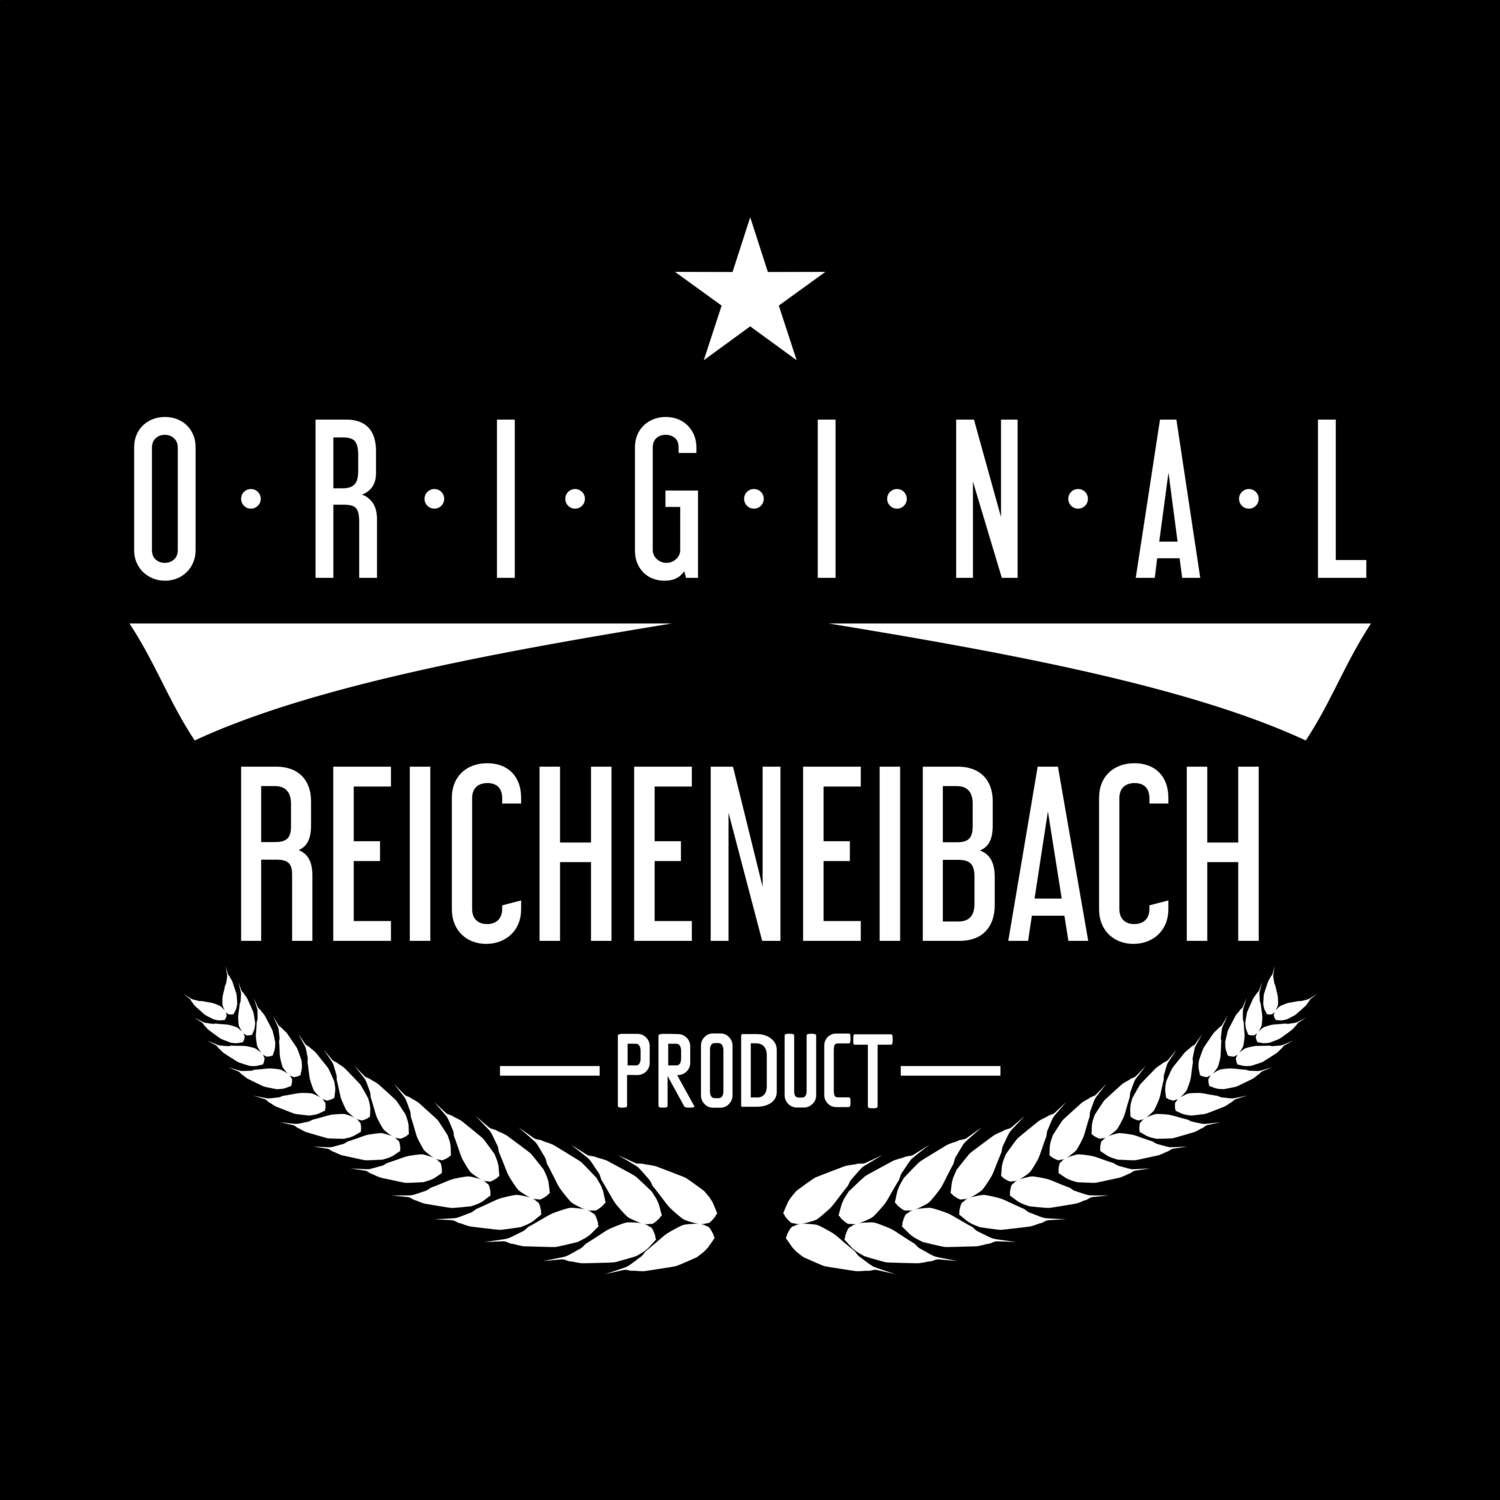 Reicheneibach T-Shirt »Original Product«